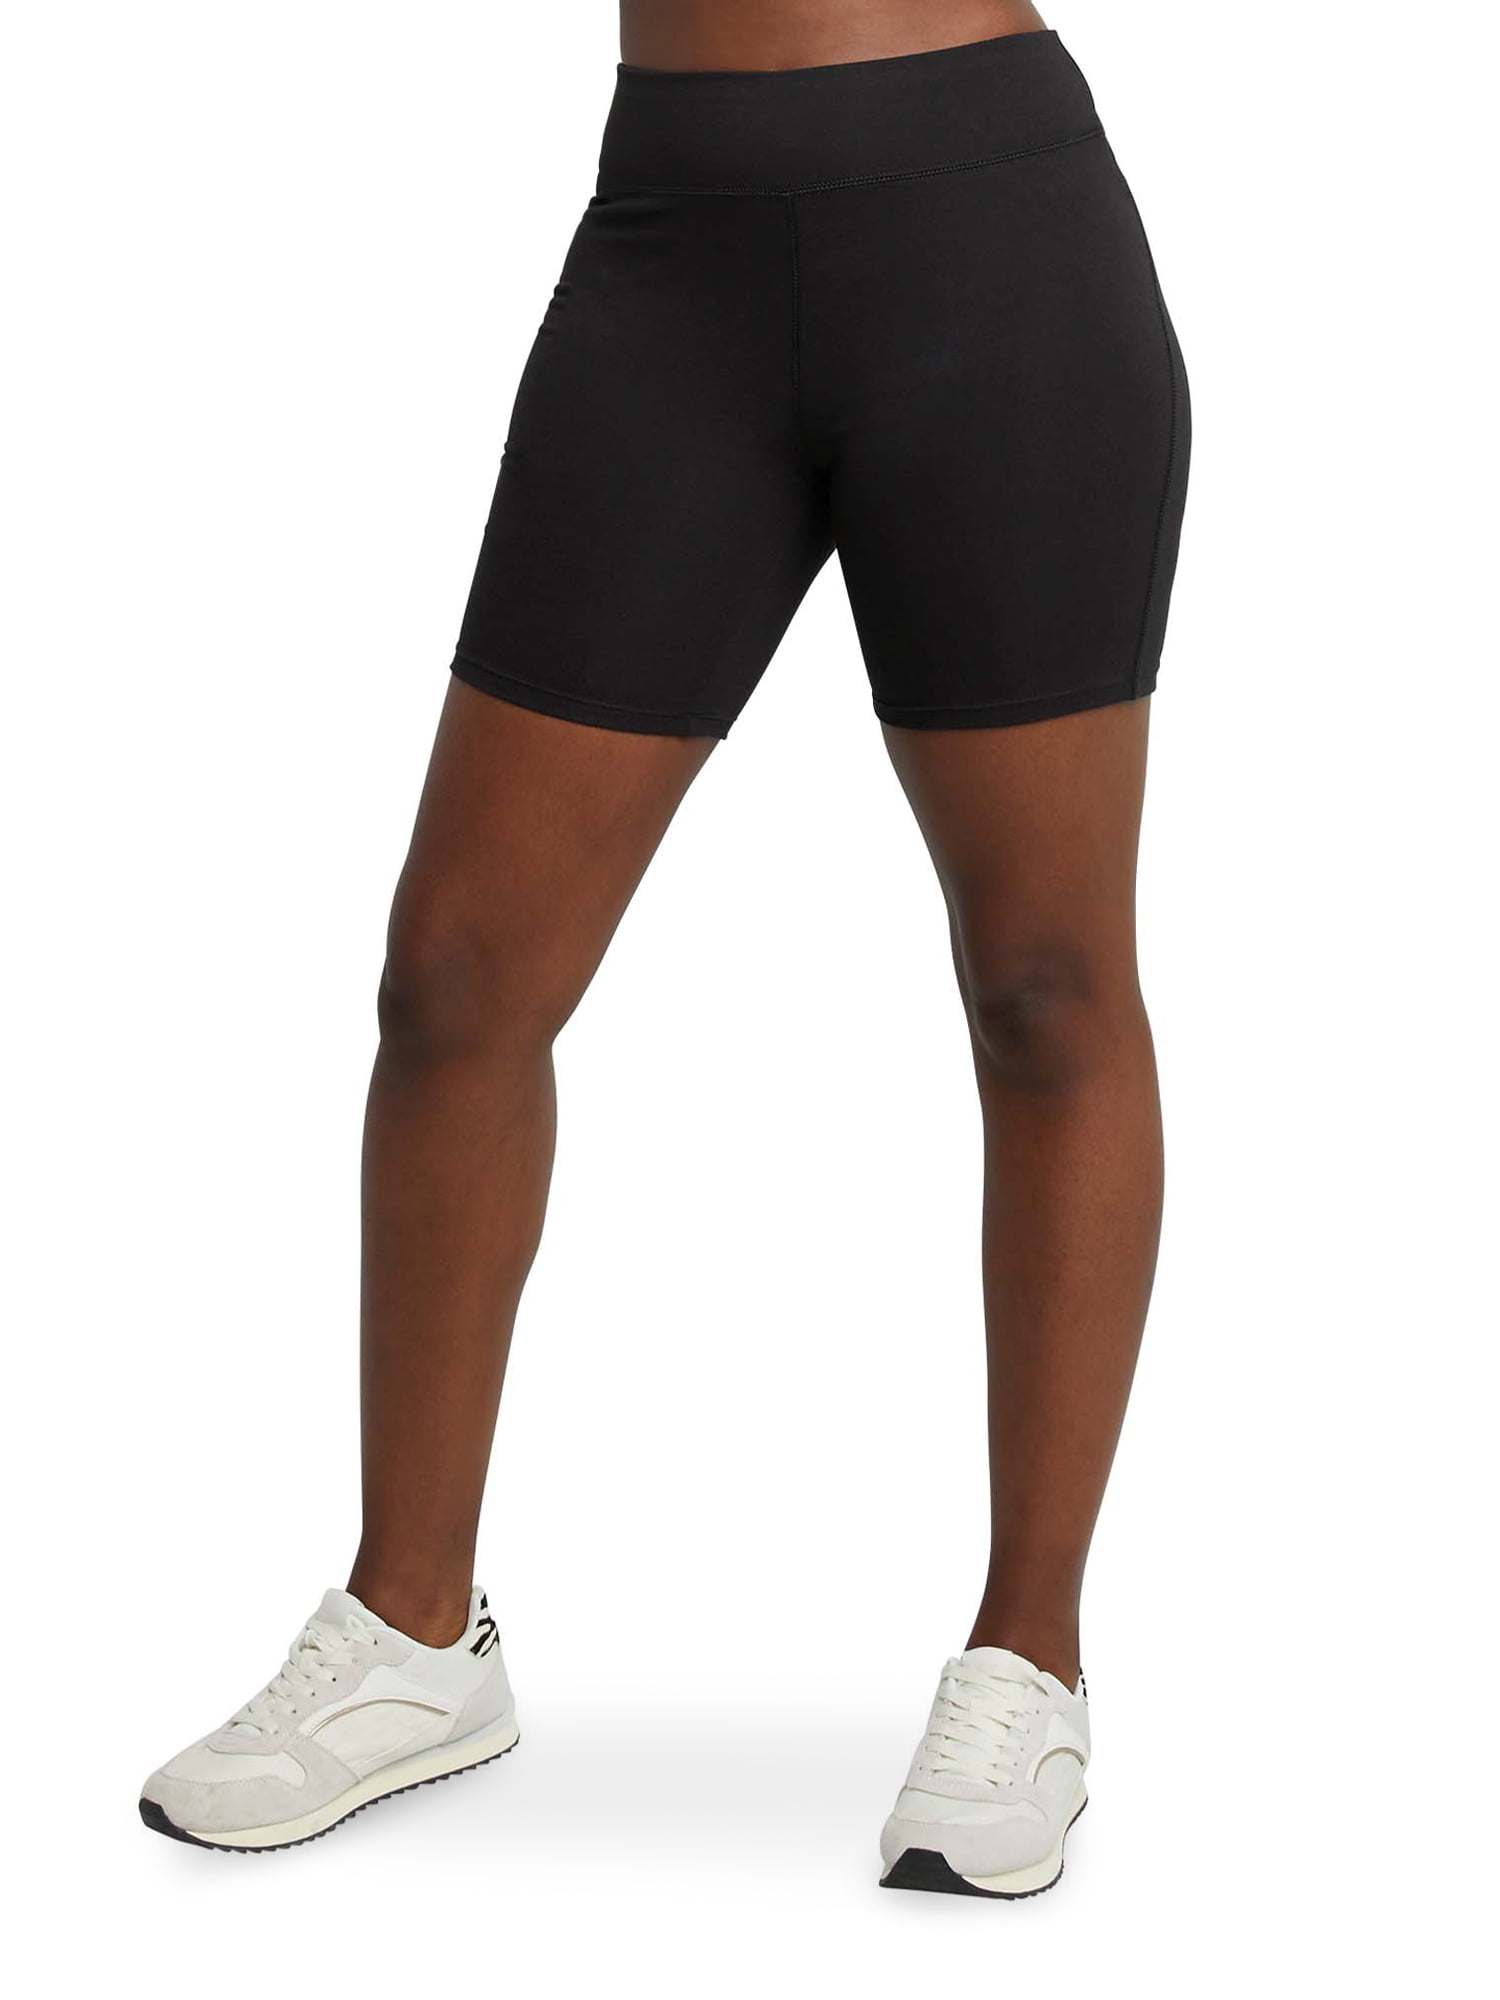 Hanes Originals Women's High Rise Bike Shorts, Sizes XS-XXL